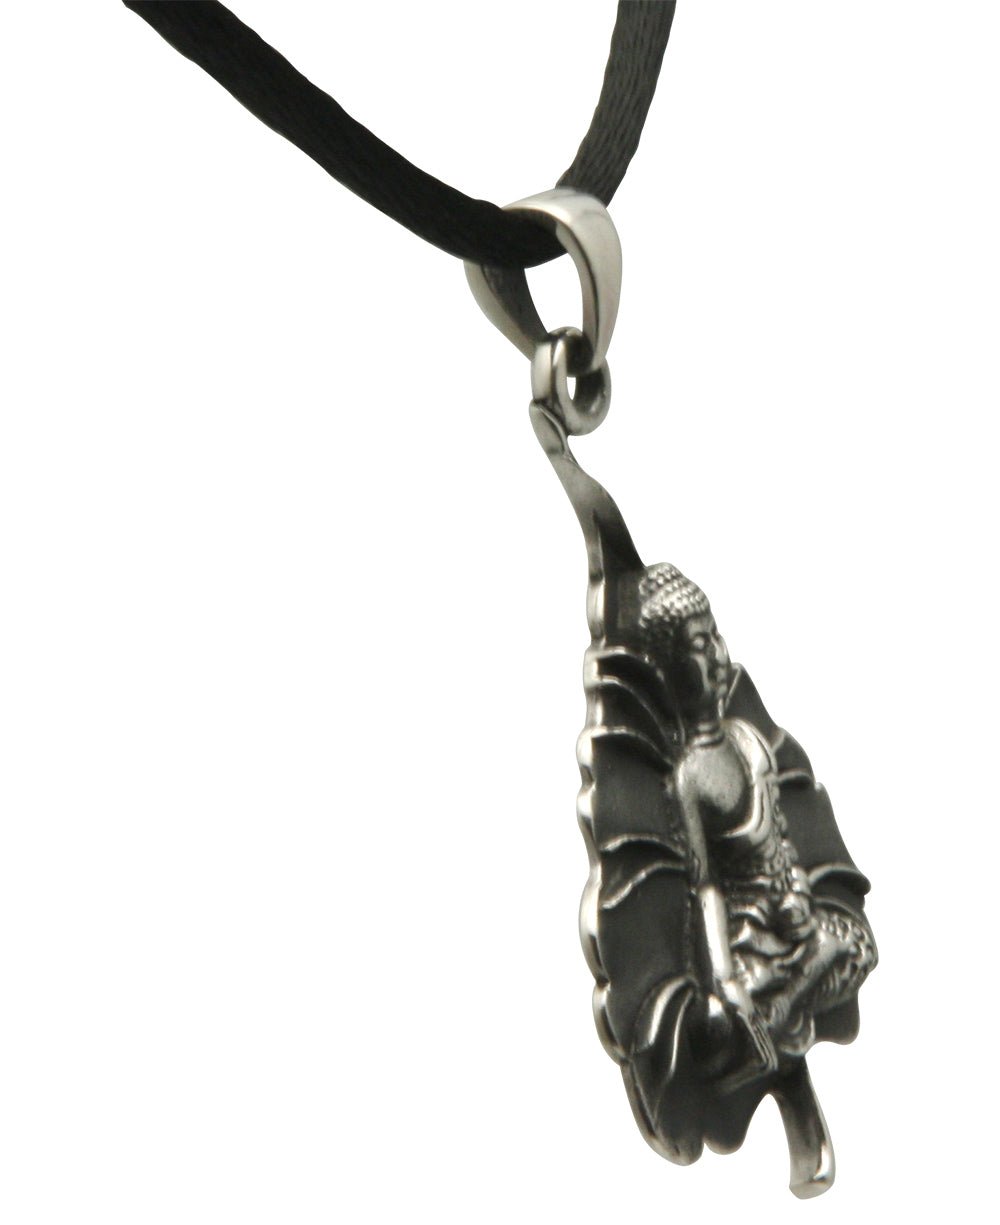 Green leaf necklace, jade leaf pendant, green stone necklace, crystal leaf,  nature lover, a hand carved leaf on a sterling silver chain